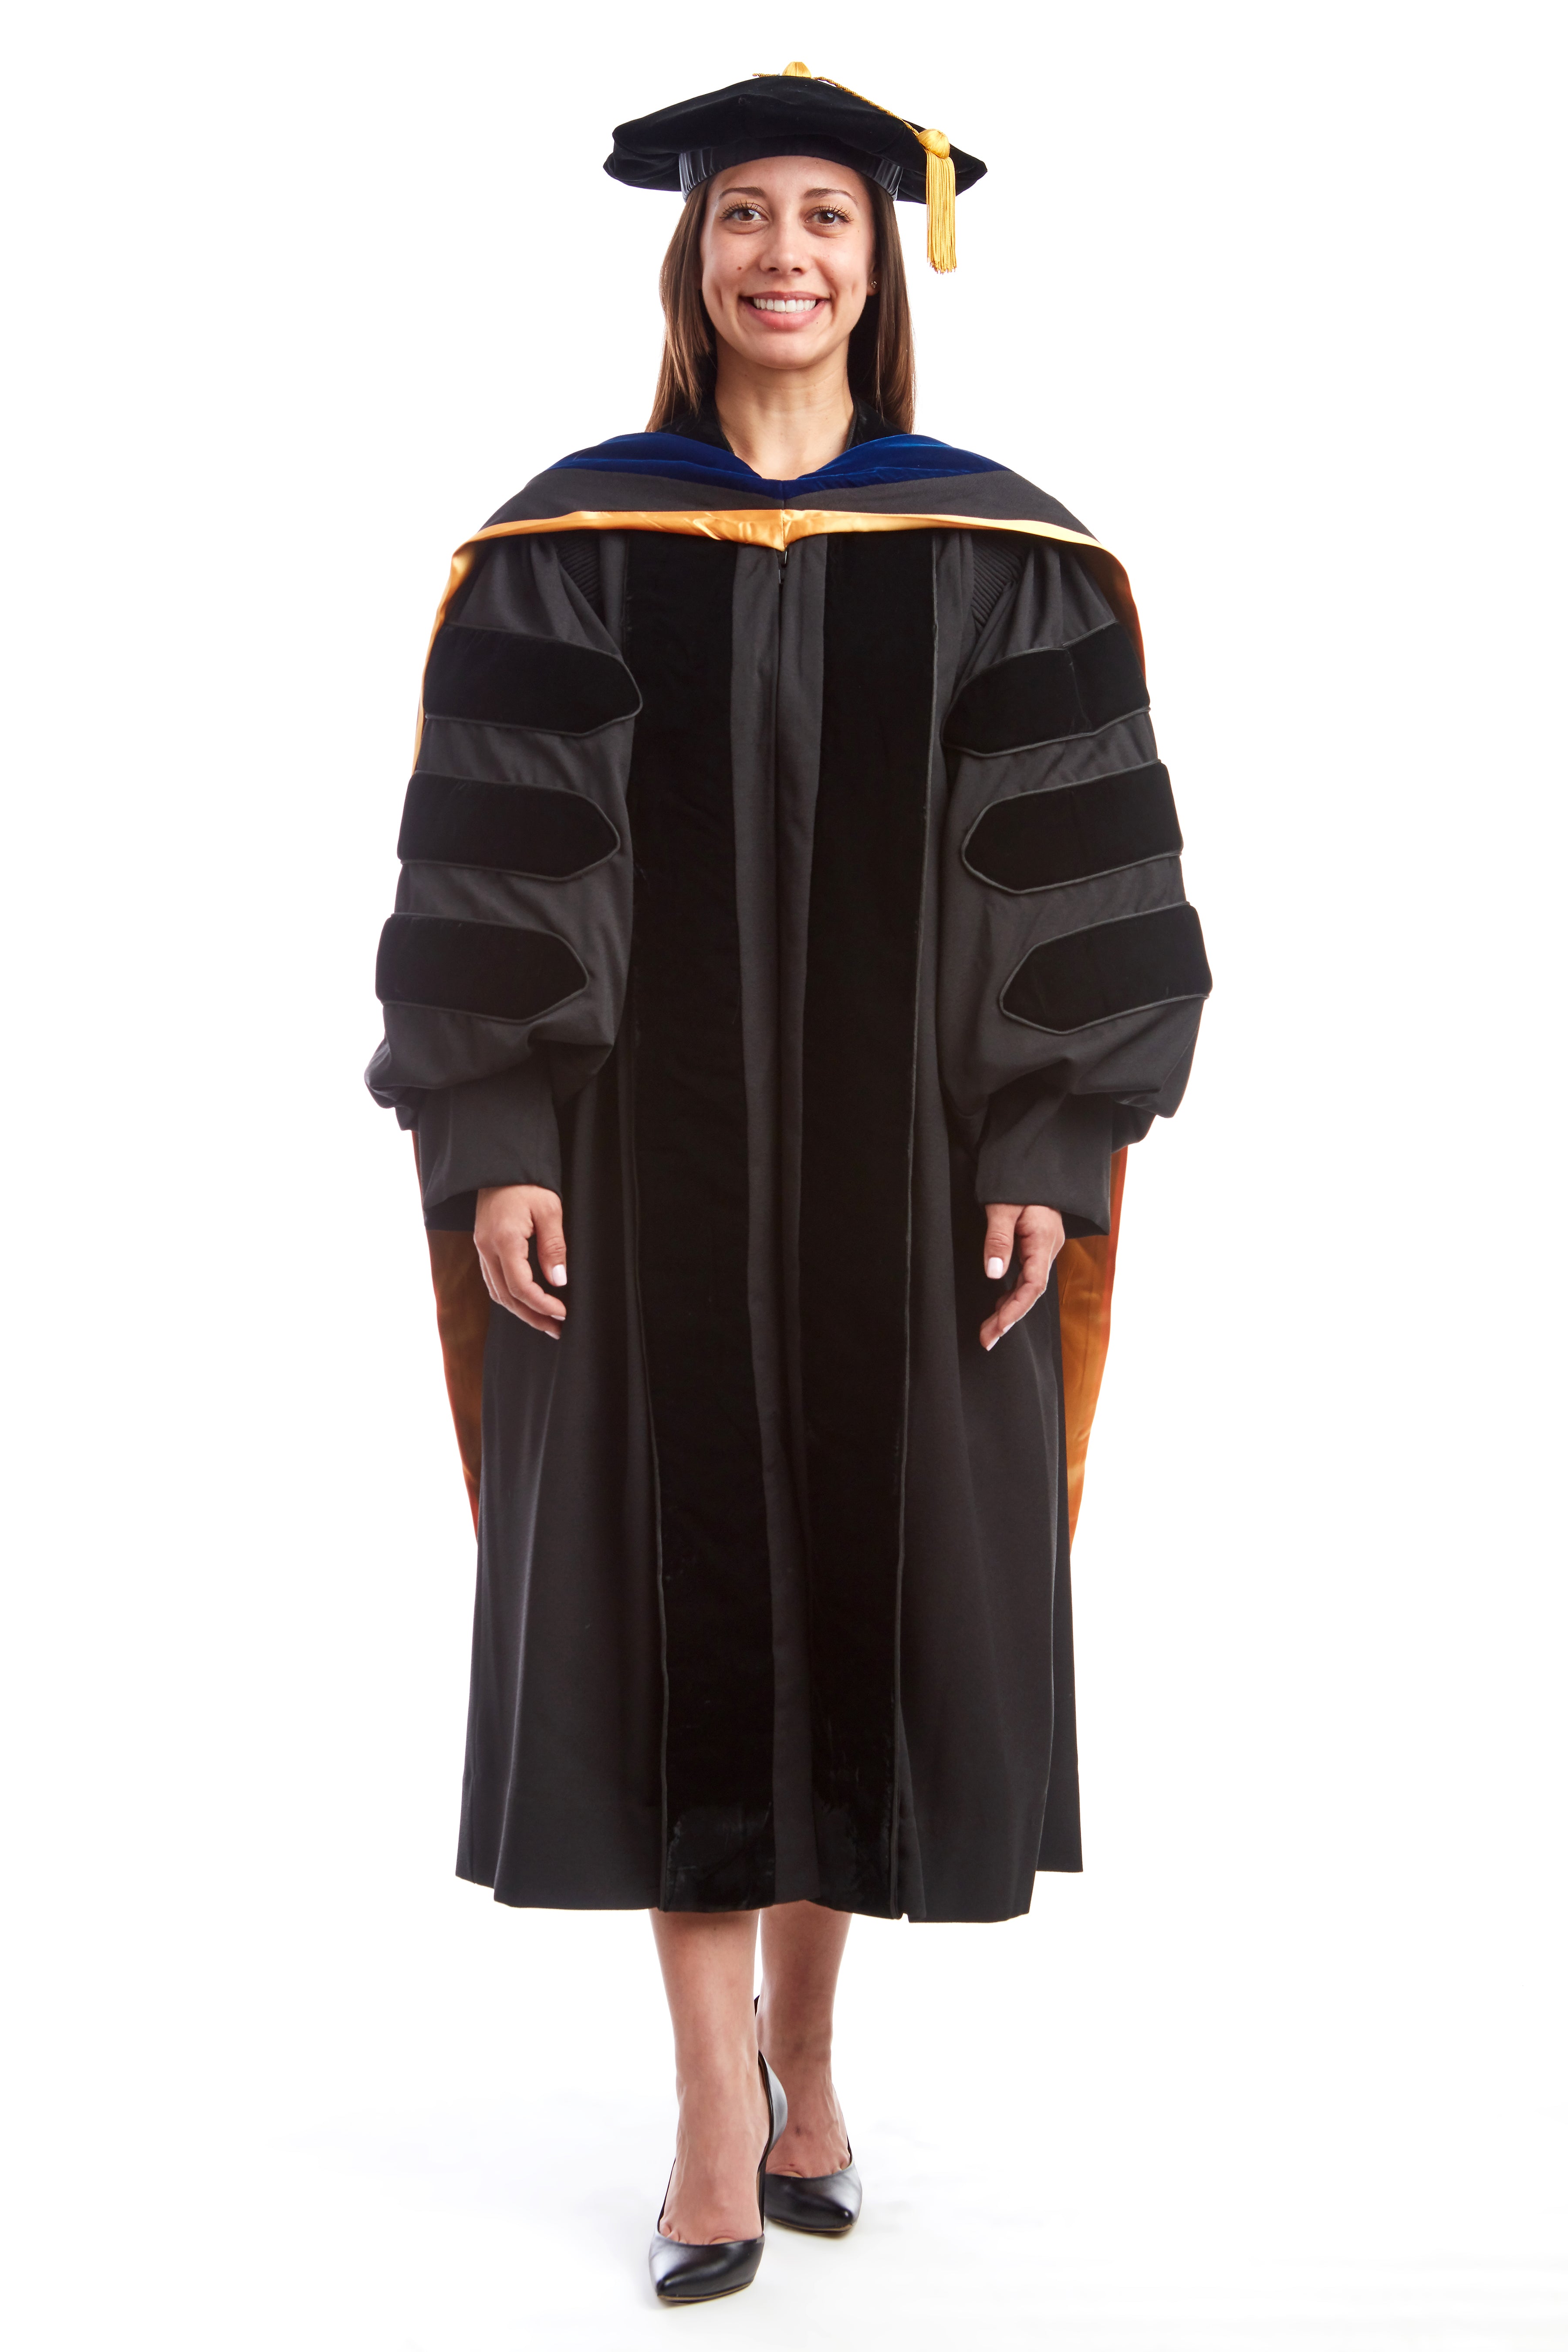 Premium Graduation Regalia - Doctoral Gown, Hood, & 8-Sided Tam – CAPGOWN